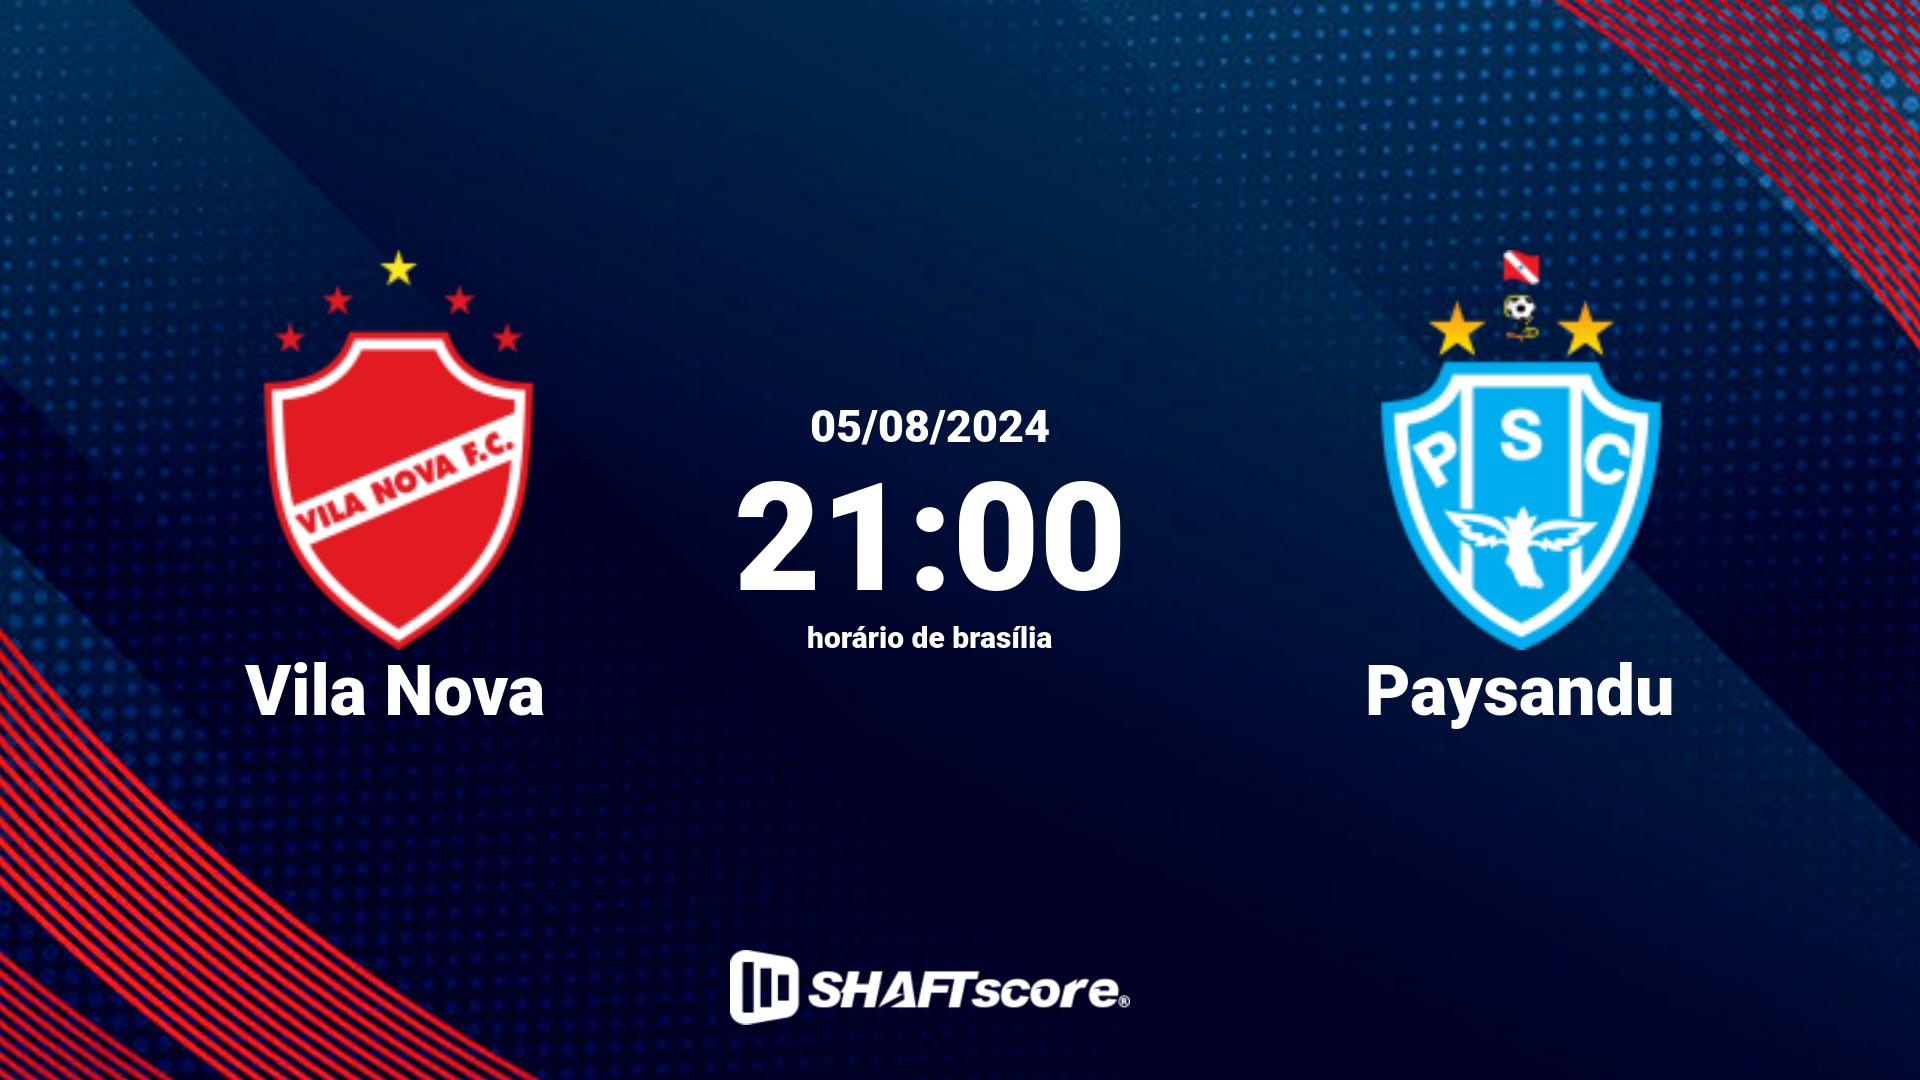 Estatísticas do jogo Vila Nova vs Paysandu 05.08 21:00